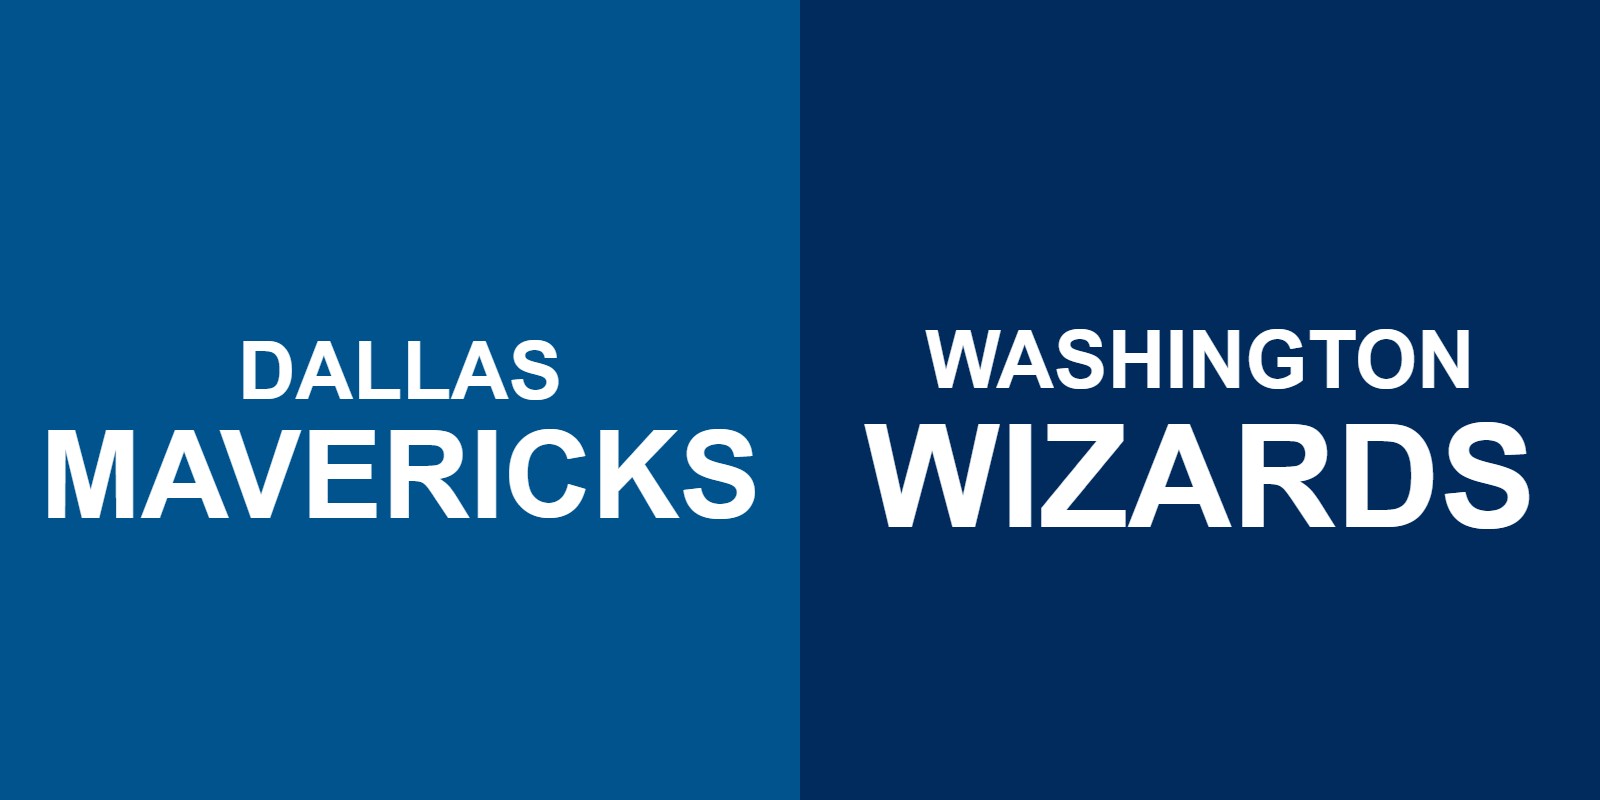 Mavericks vs Wizards